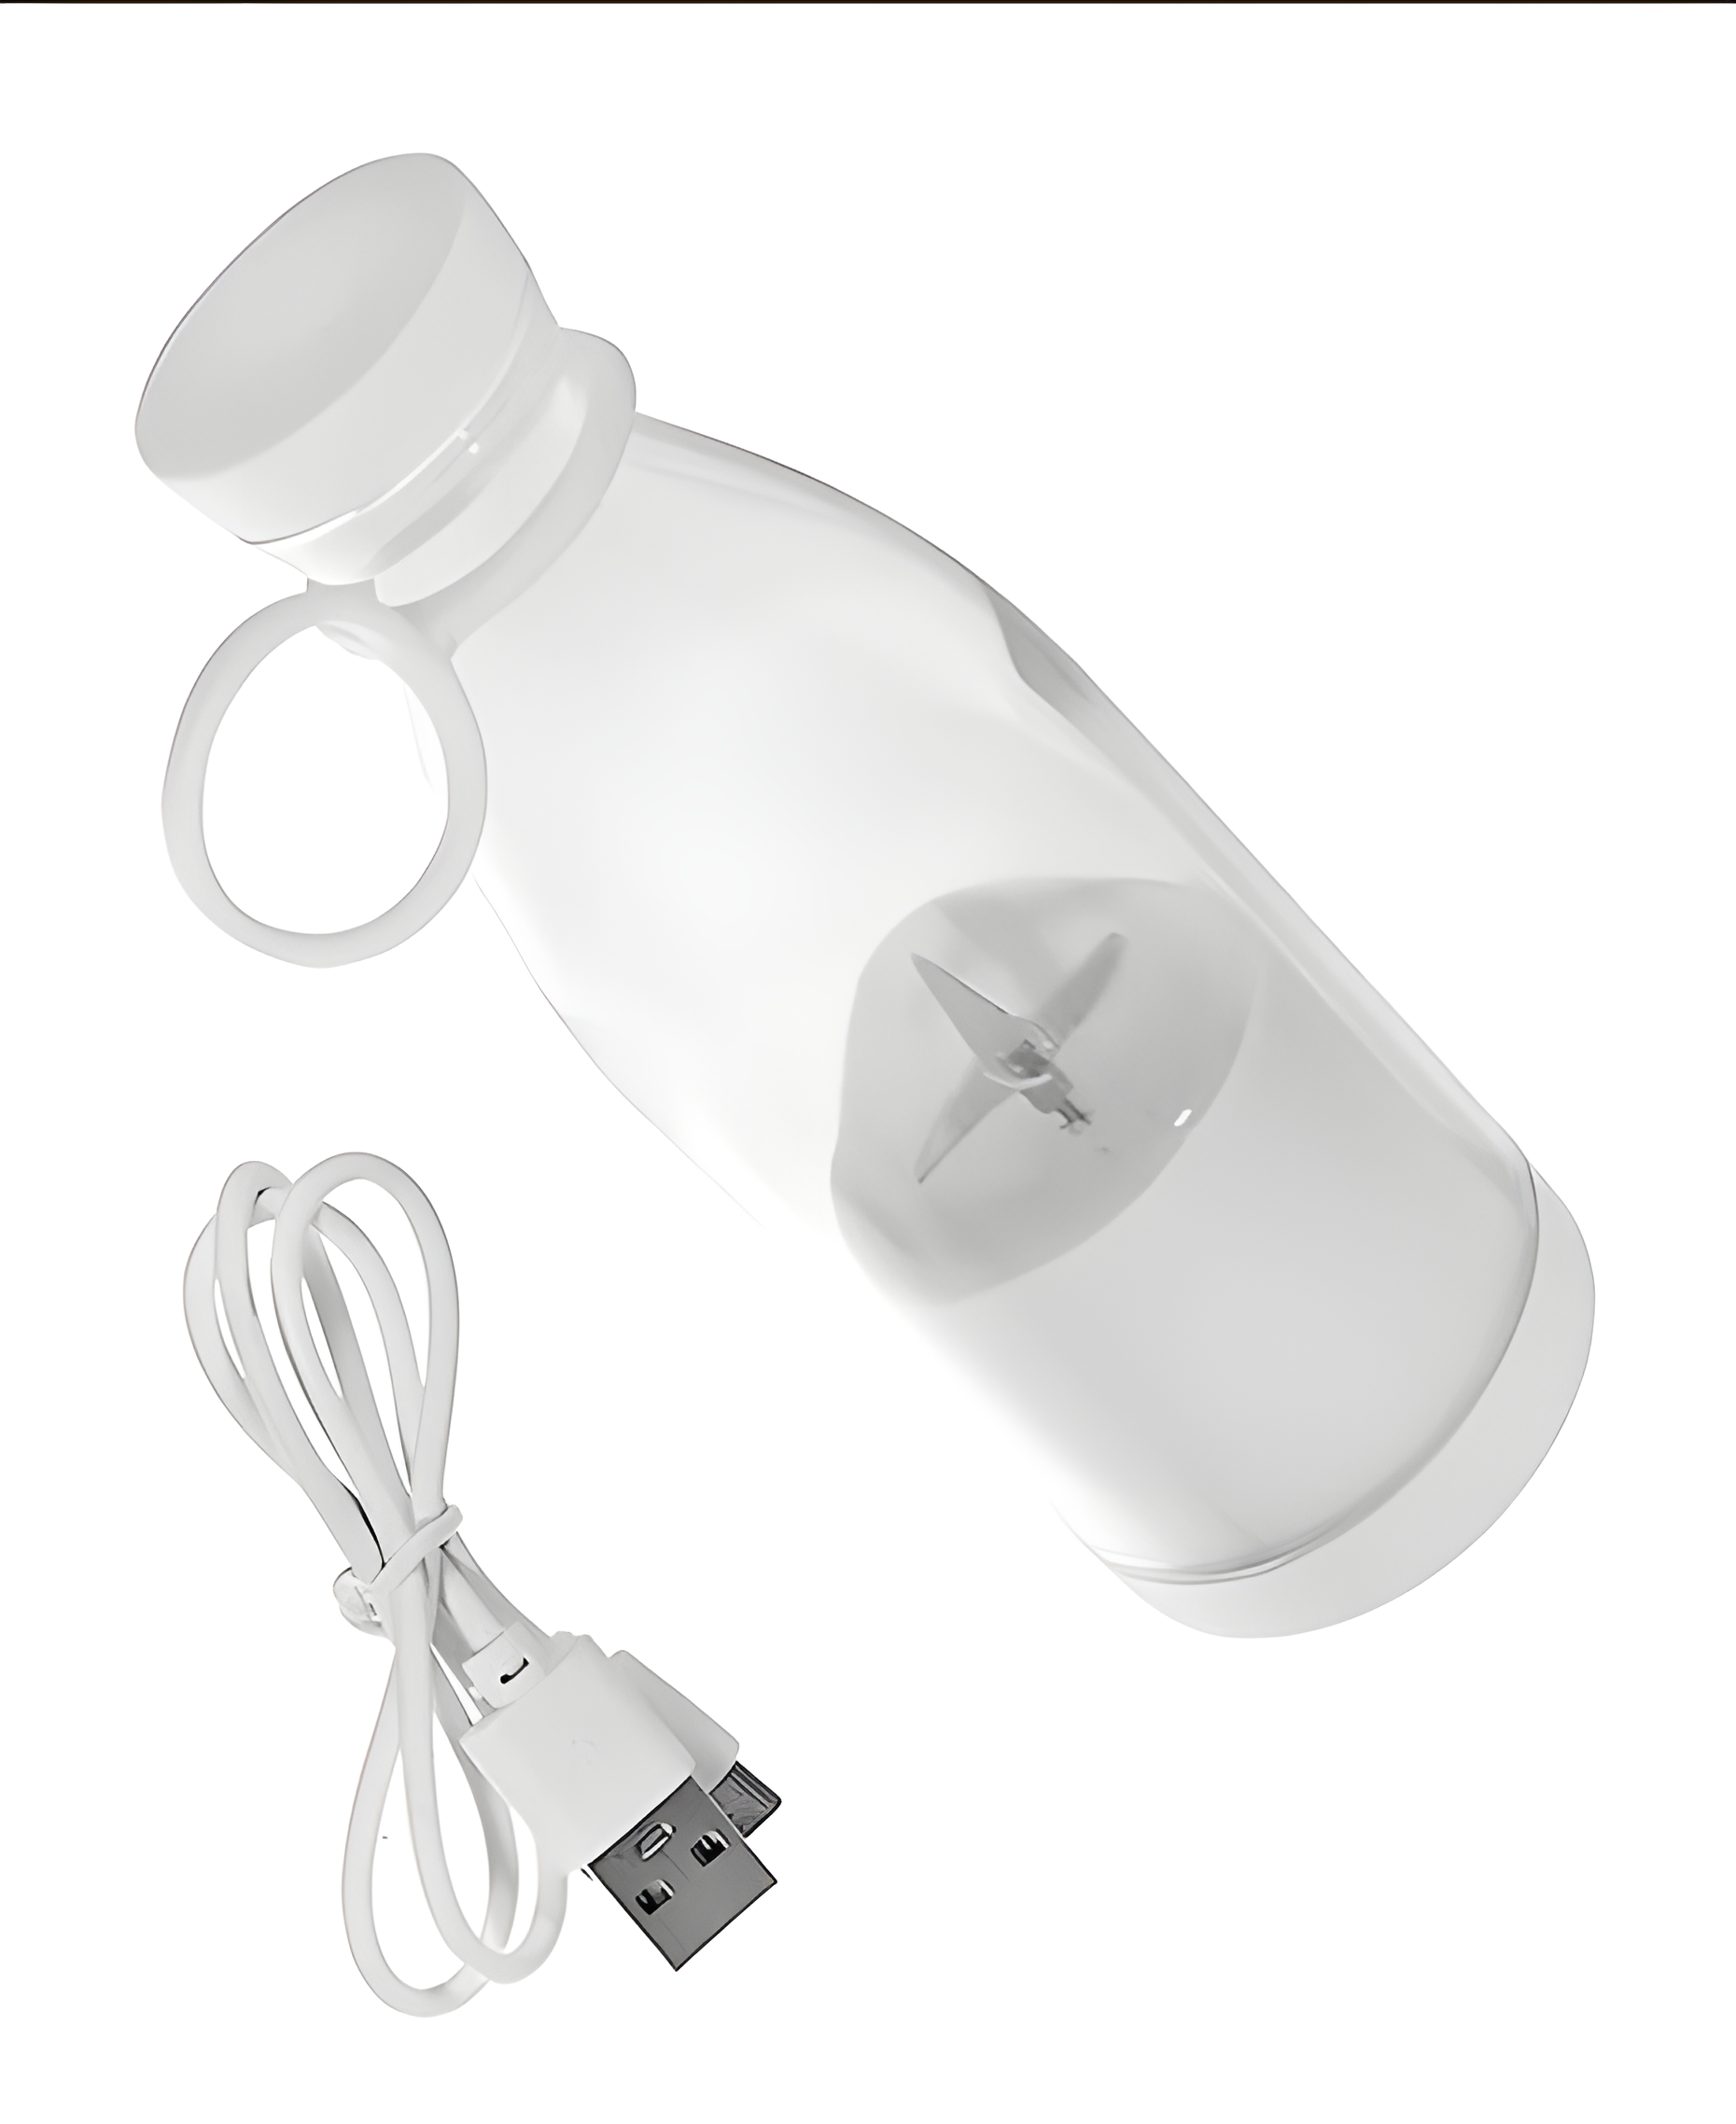 Mini Portable and Rechargeable Juice Maker, Blender Mixer USB Rechargeable Mini Fruit Juicer Blender - White image